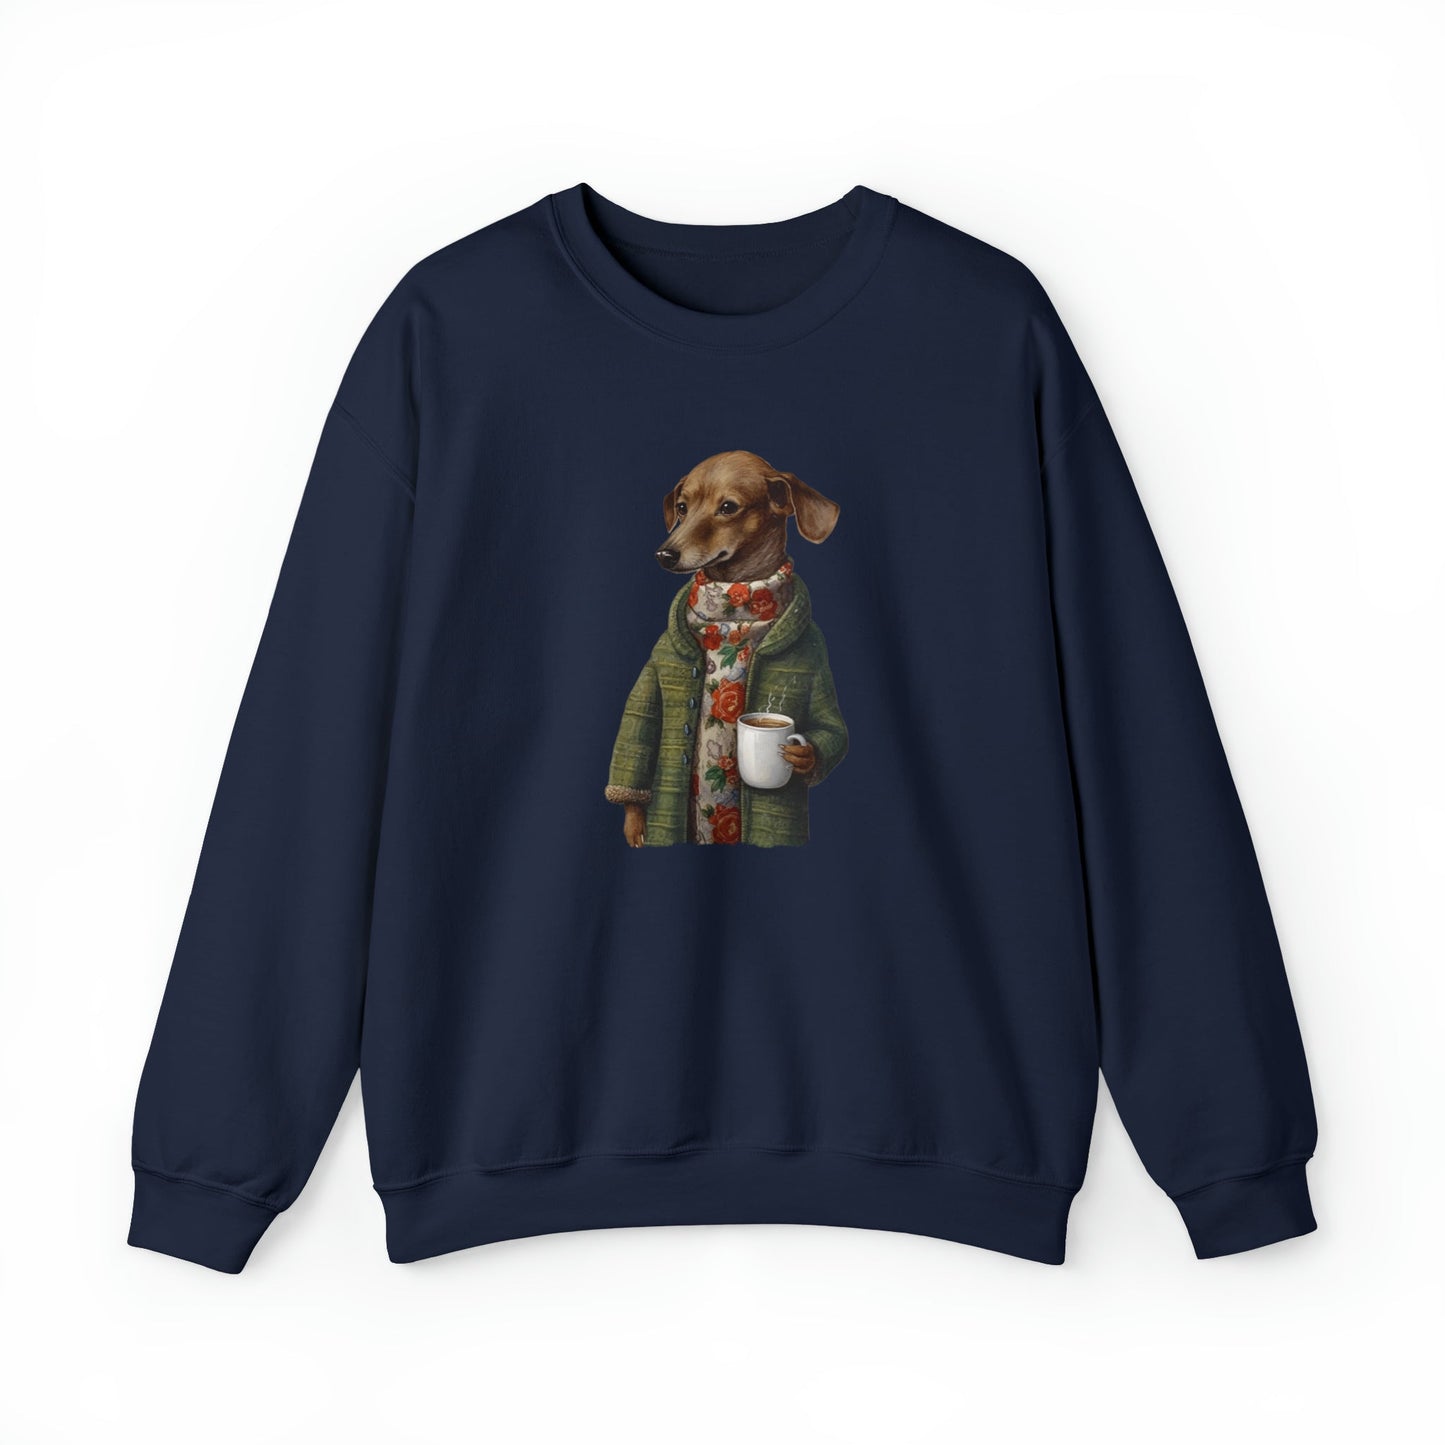 Dachshund Dog Sweatshirt, Dogs in Sweaters Art Collection, Unique Whimsical Boho Design - FlooredByArt